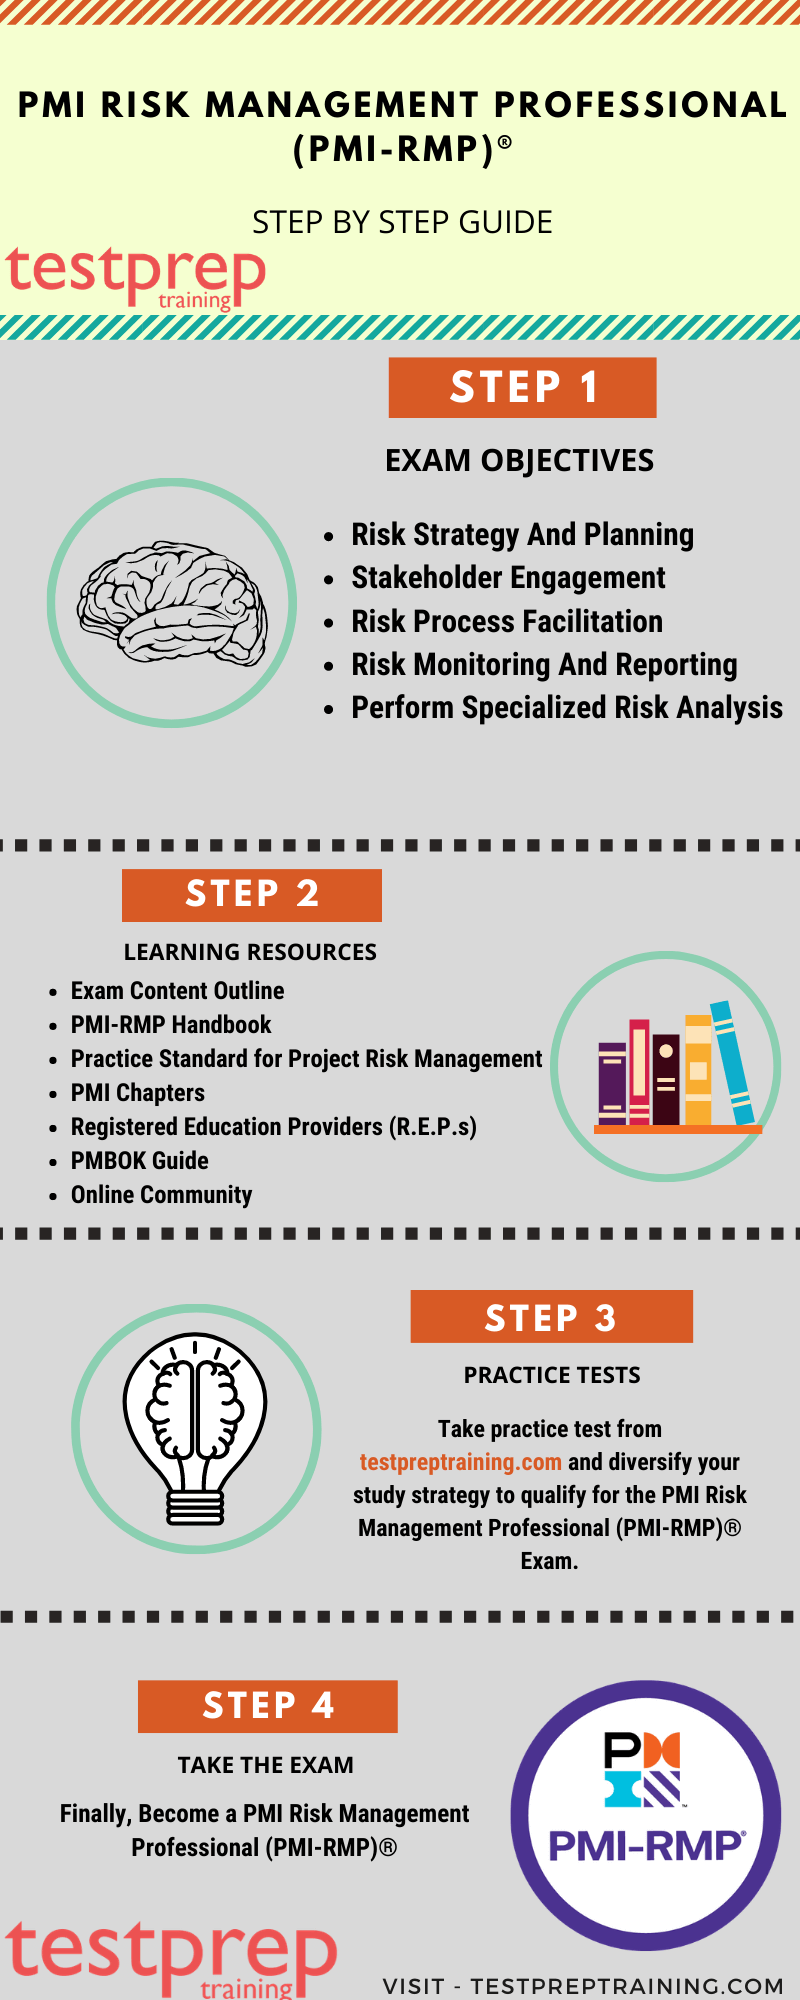 PMI Risk Management Professional (PMI-RMP)® Preparation Guide